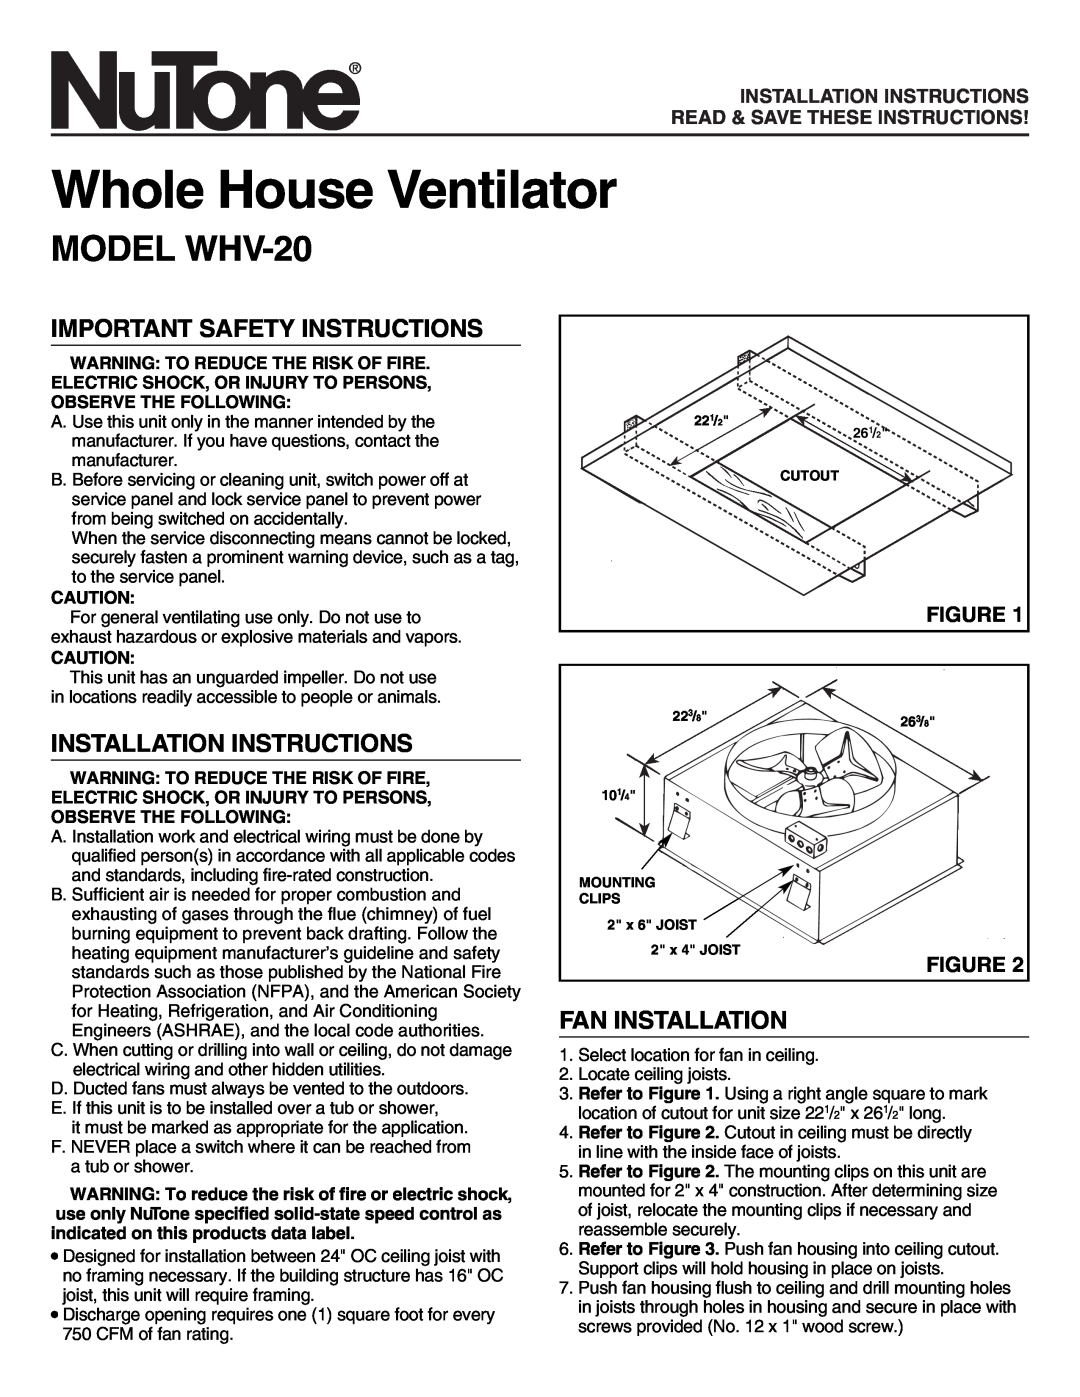 NuTone WHV-20 installation instructions Important Safety Instructions, Installation Instructions, Fan Installation, Figure 